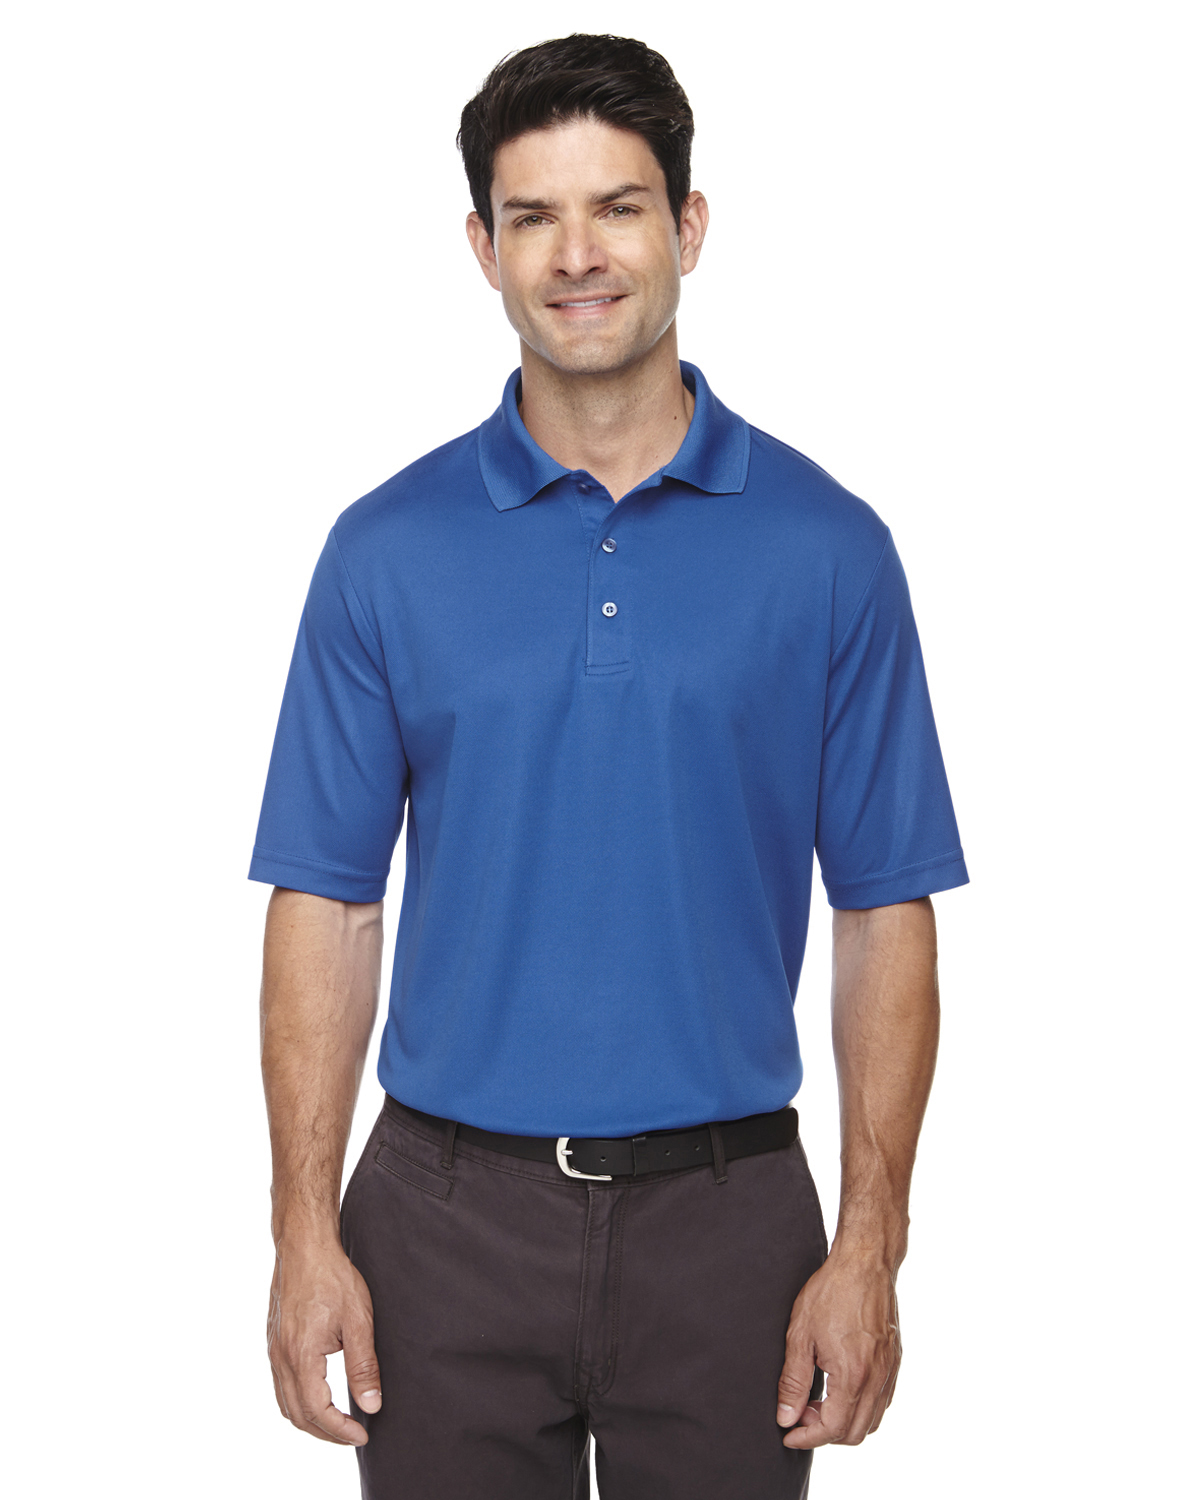 NEW Core 365 Men's 100% Polyester Performance Piqué Polo S-XL Shirt R ...